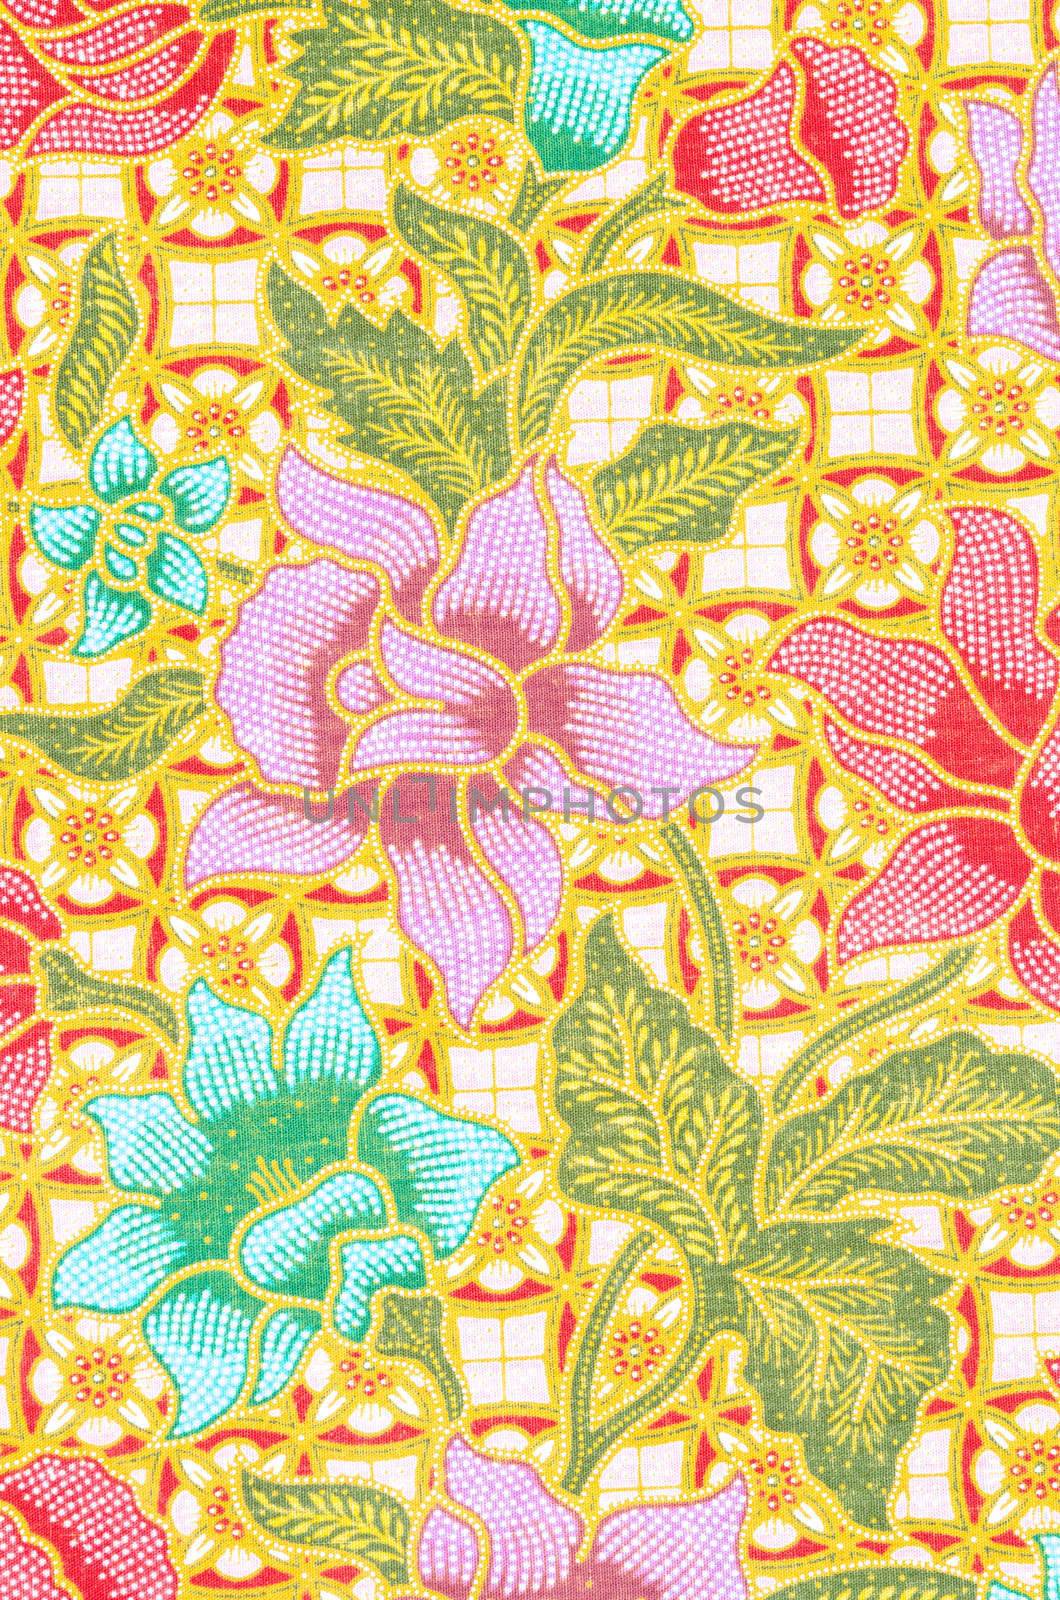 flower pattern background on batik fabric. by Gamjai